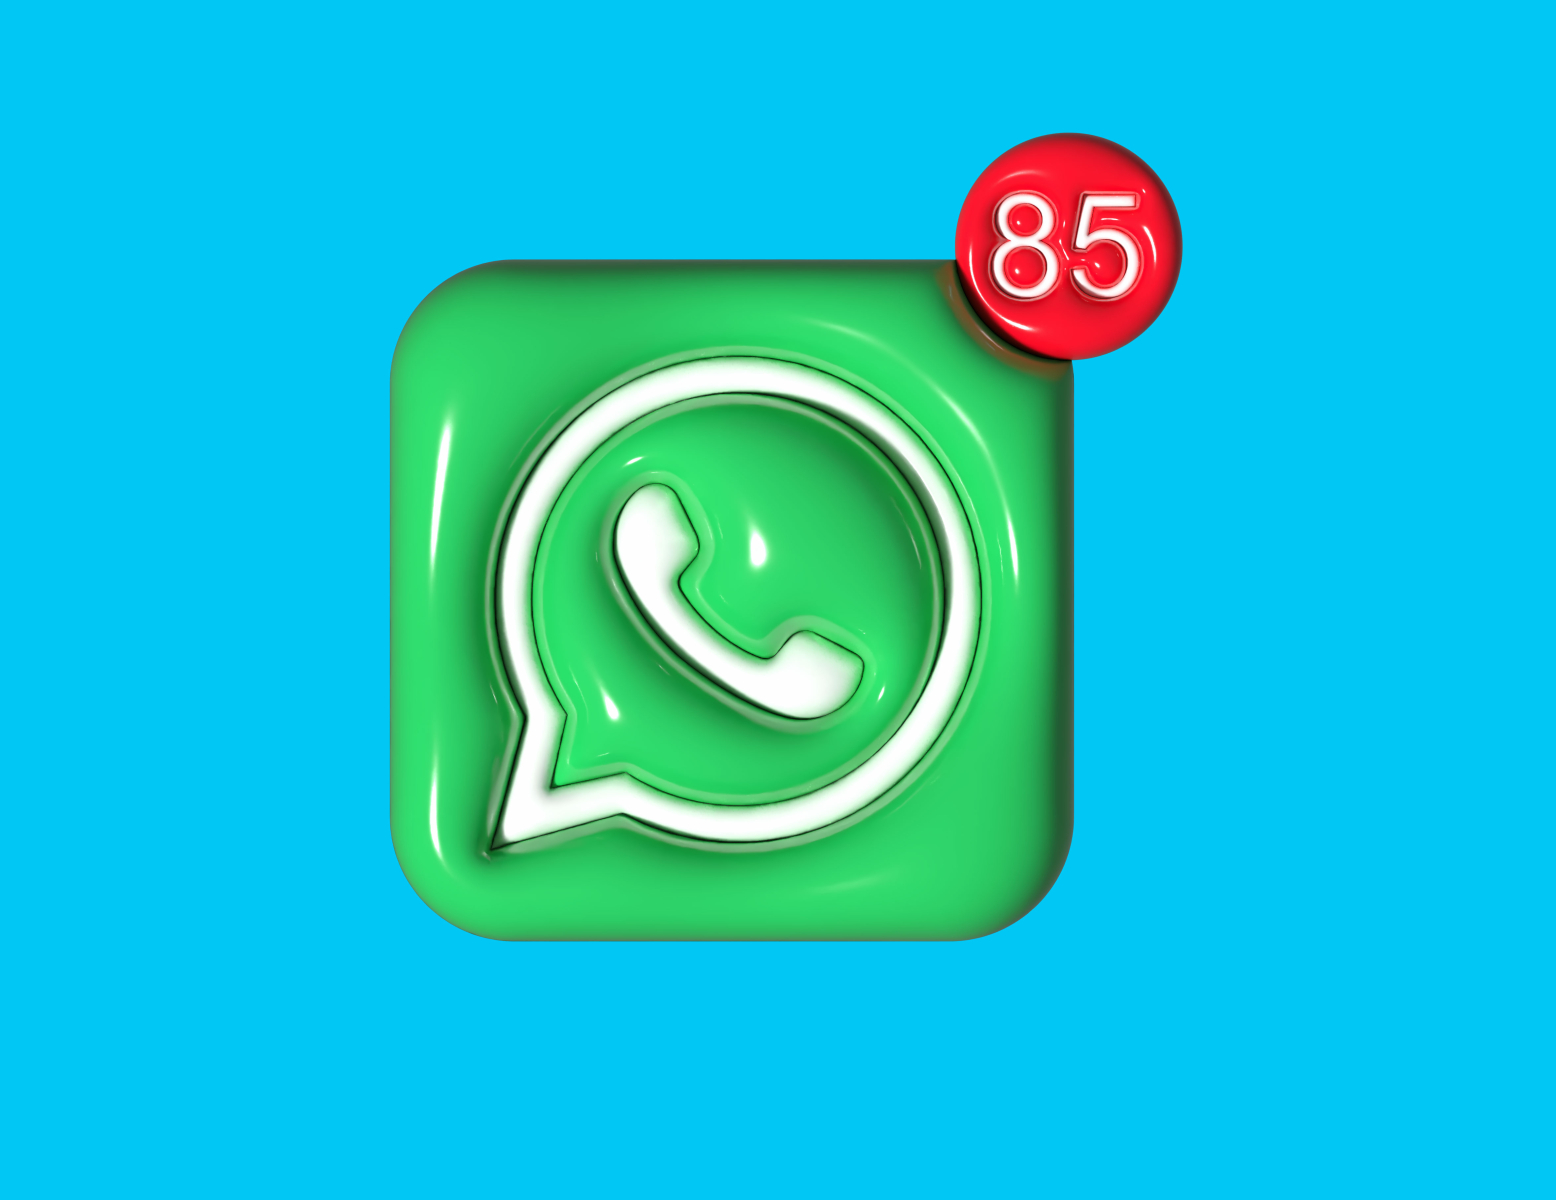 Premium PSD | 3d rendering of whatsapp logo isolated